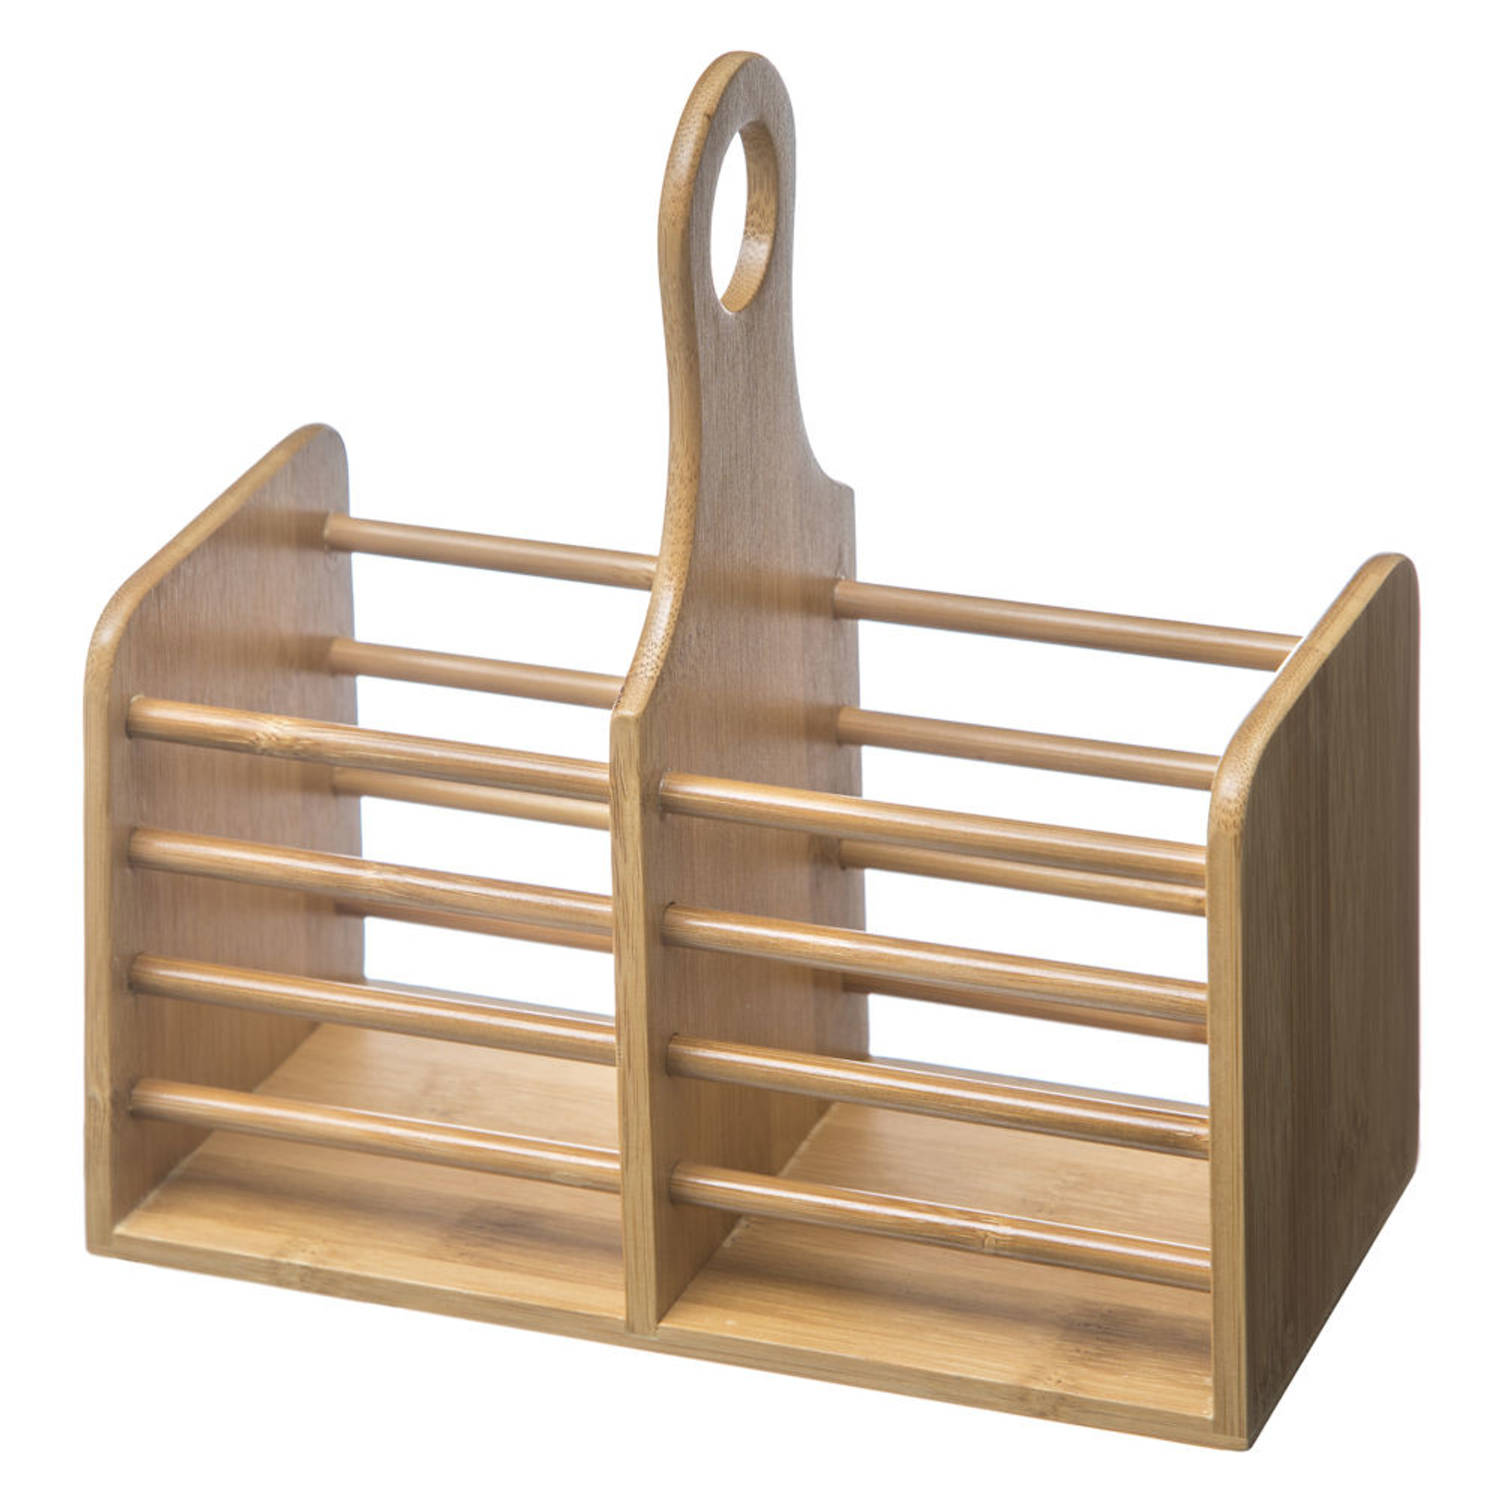 Decopatent® Bestek Organizer - Bamboe hout - 2 grote vakken - Keuken